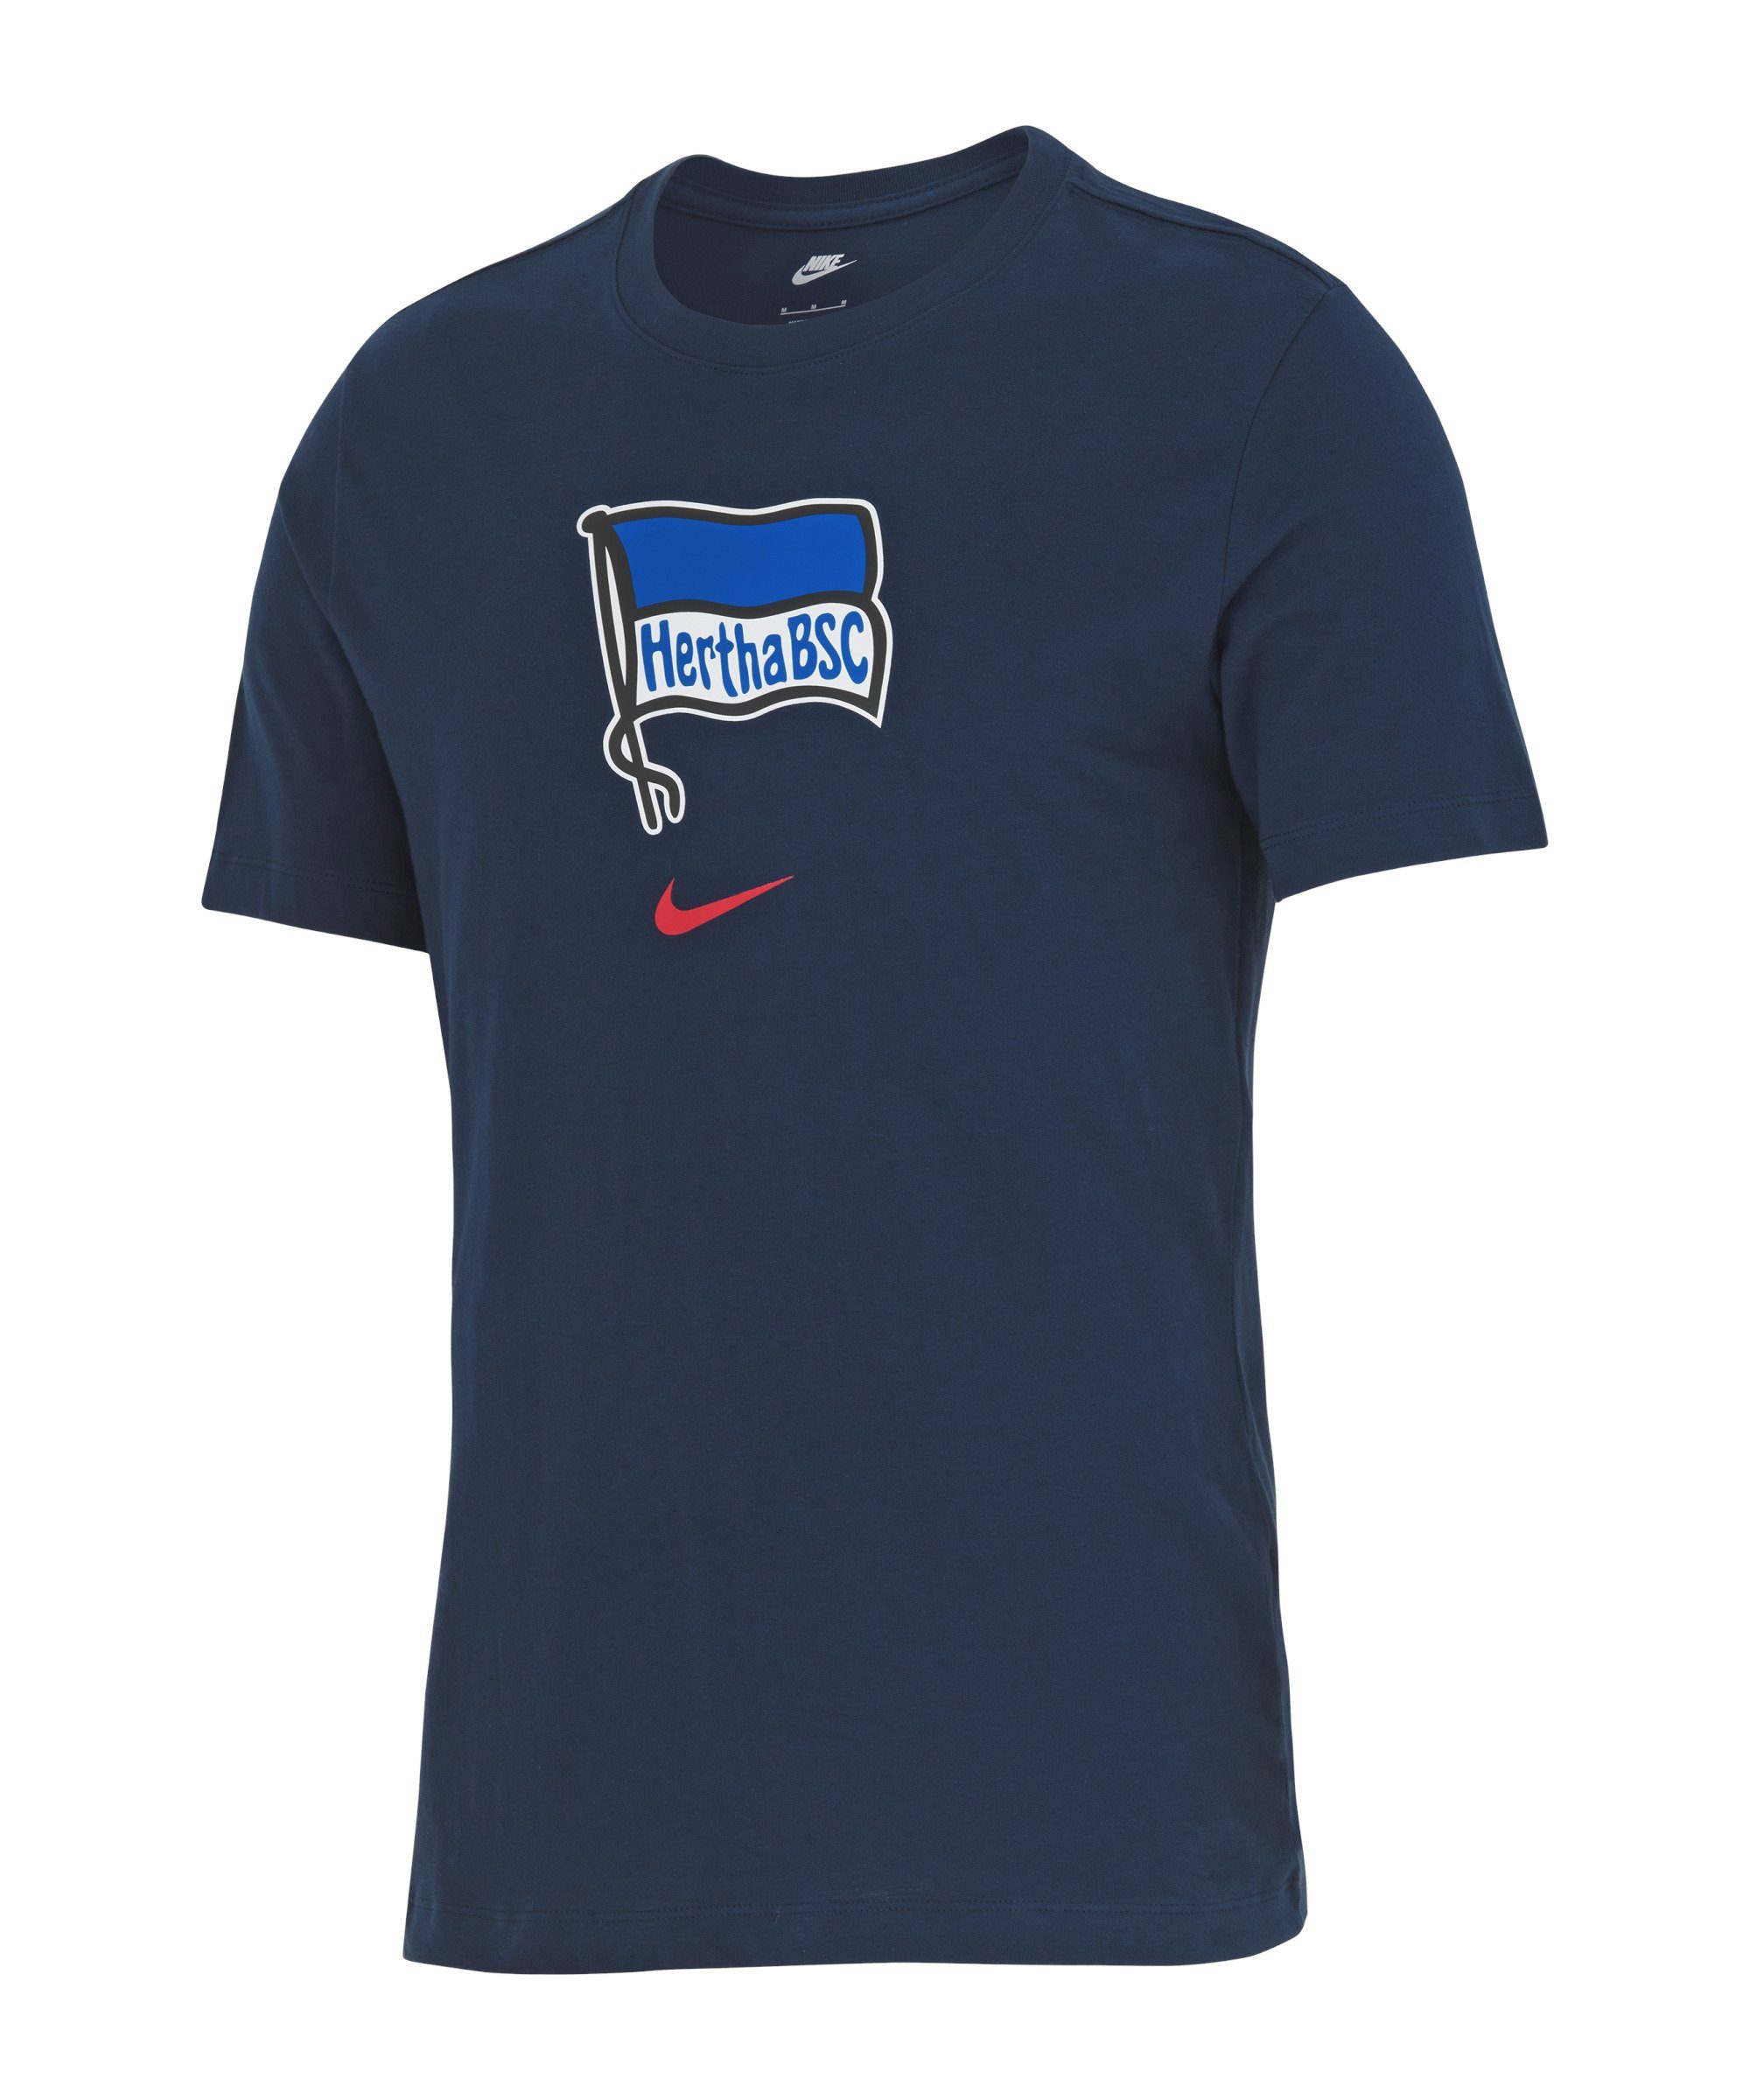 Nike T-Shirt Hertha BSC T-Shirt default blau | T-Shirts